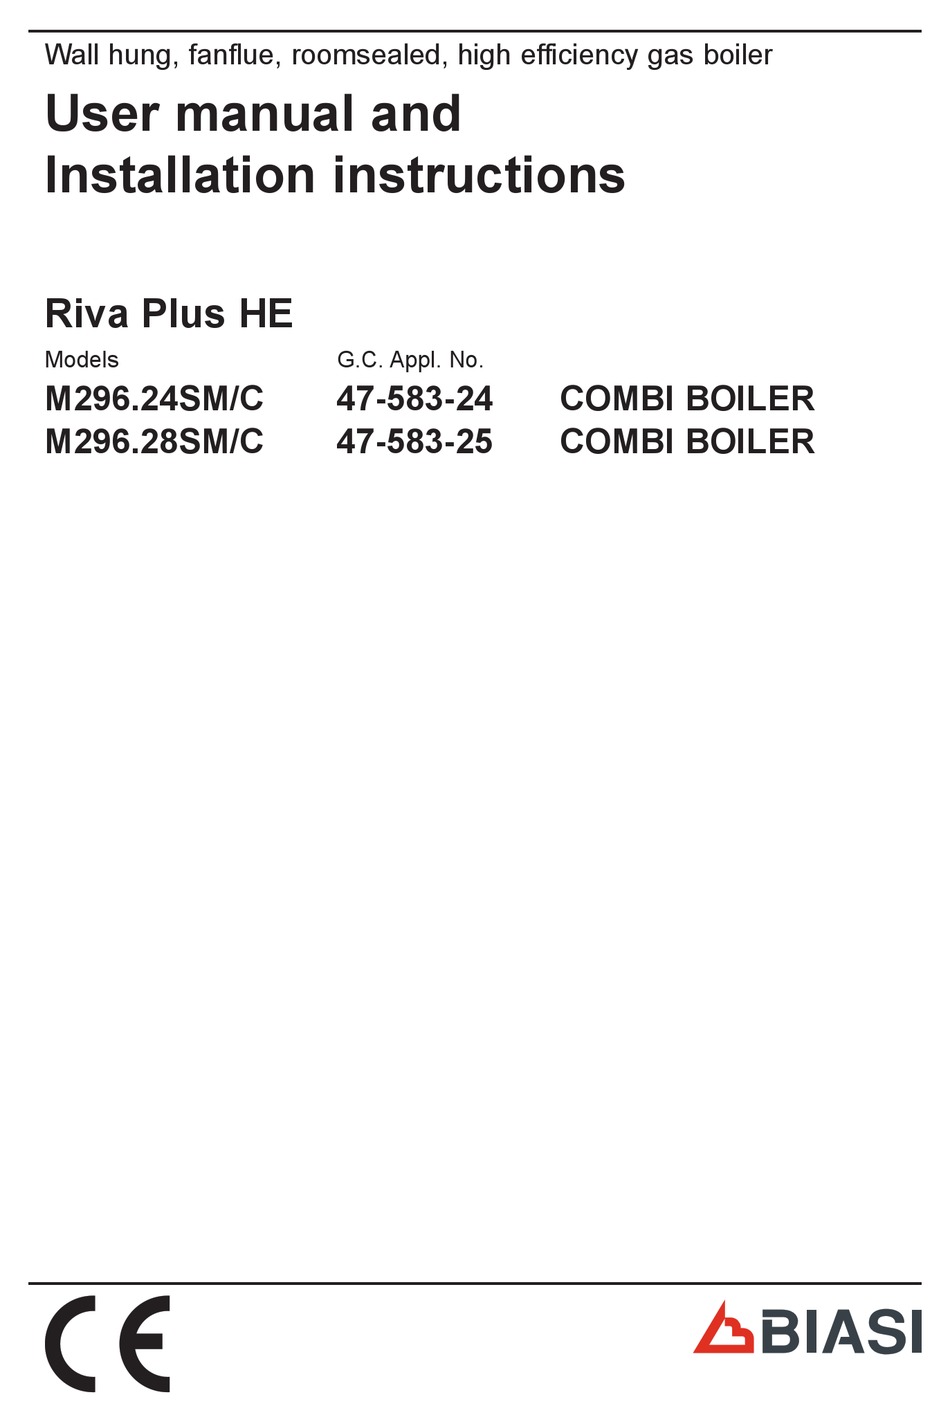 Biasi Riva Plus él M296.24 SM/C Caldera de agua caliente doméstica Interruptor de flujo KI1042107 